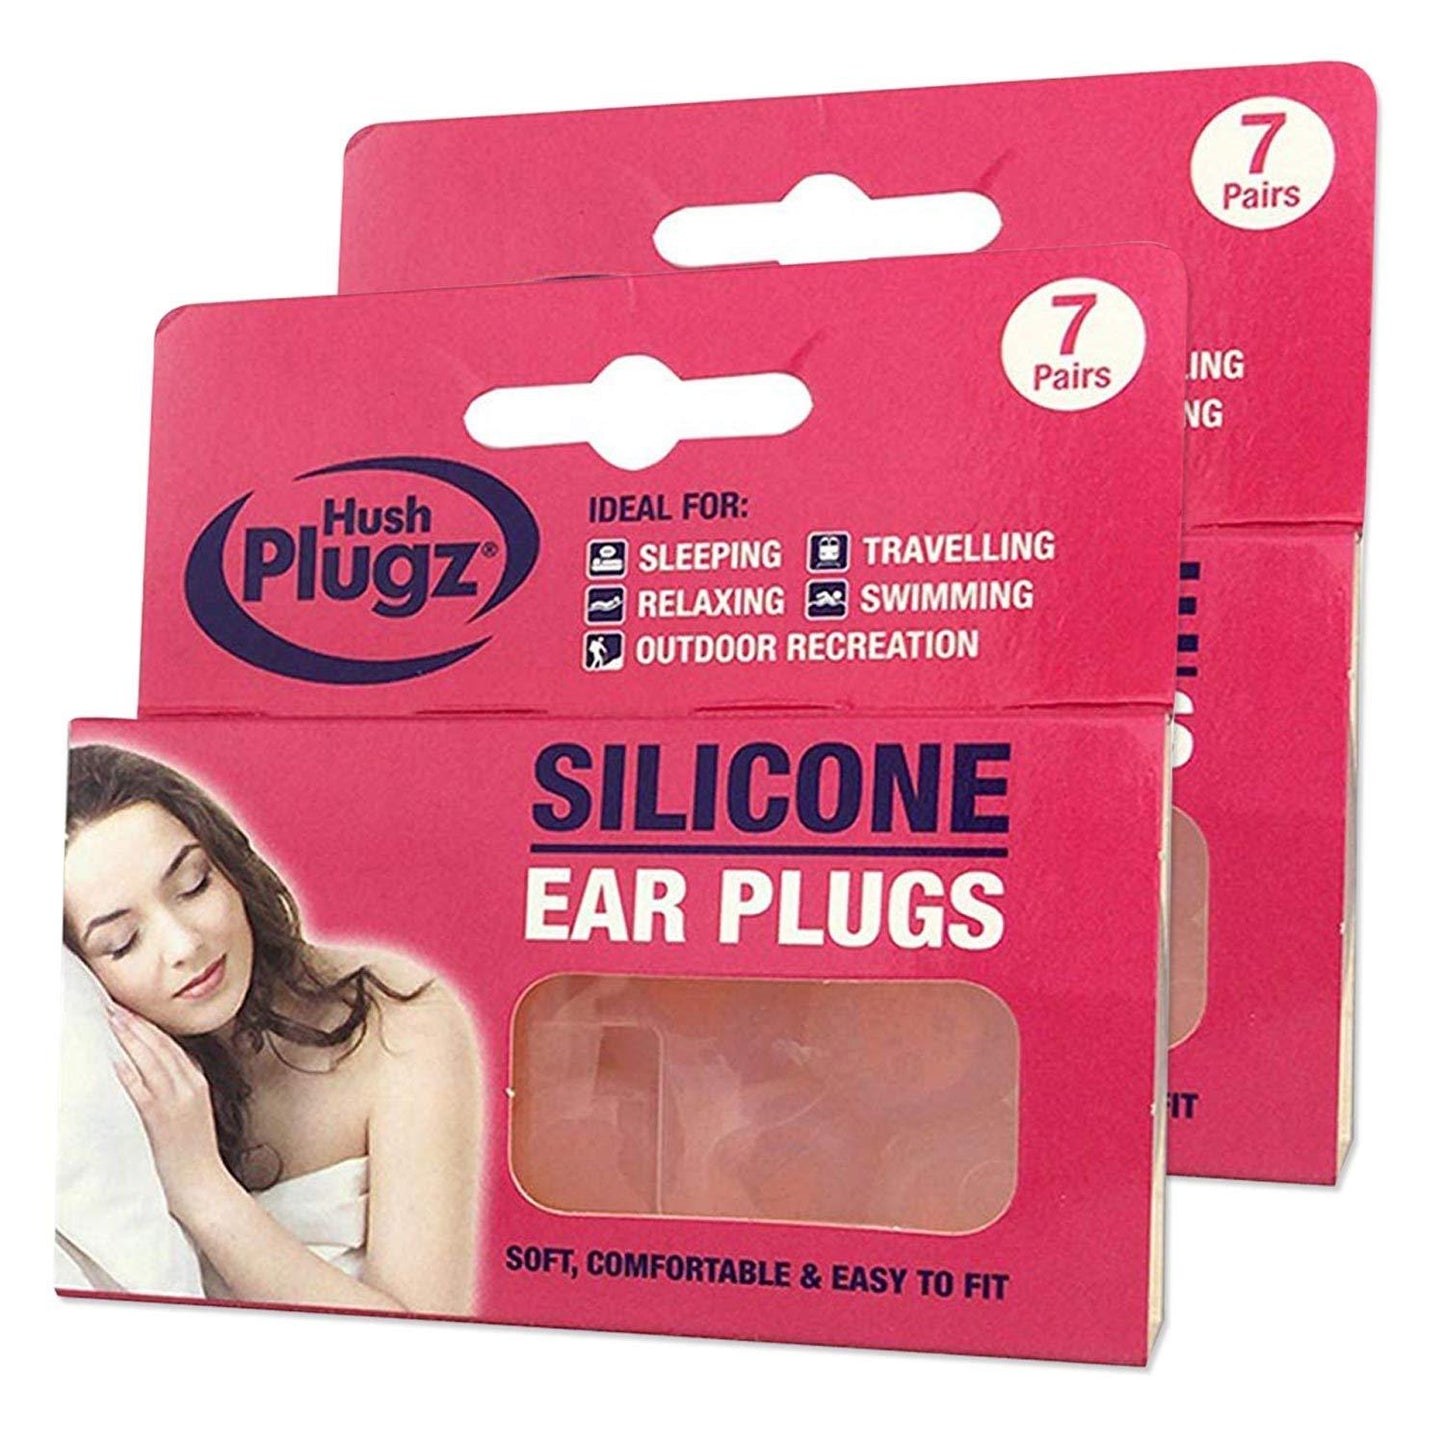 Hush Plugz Silicone Ear Plugs 7 Pairs - welzo